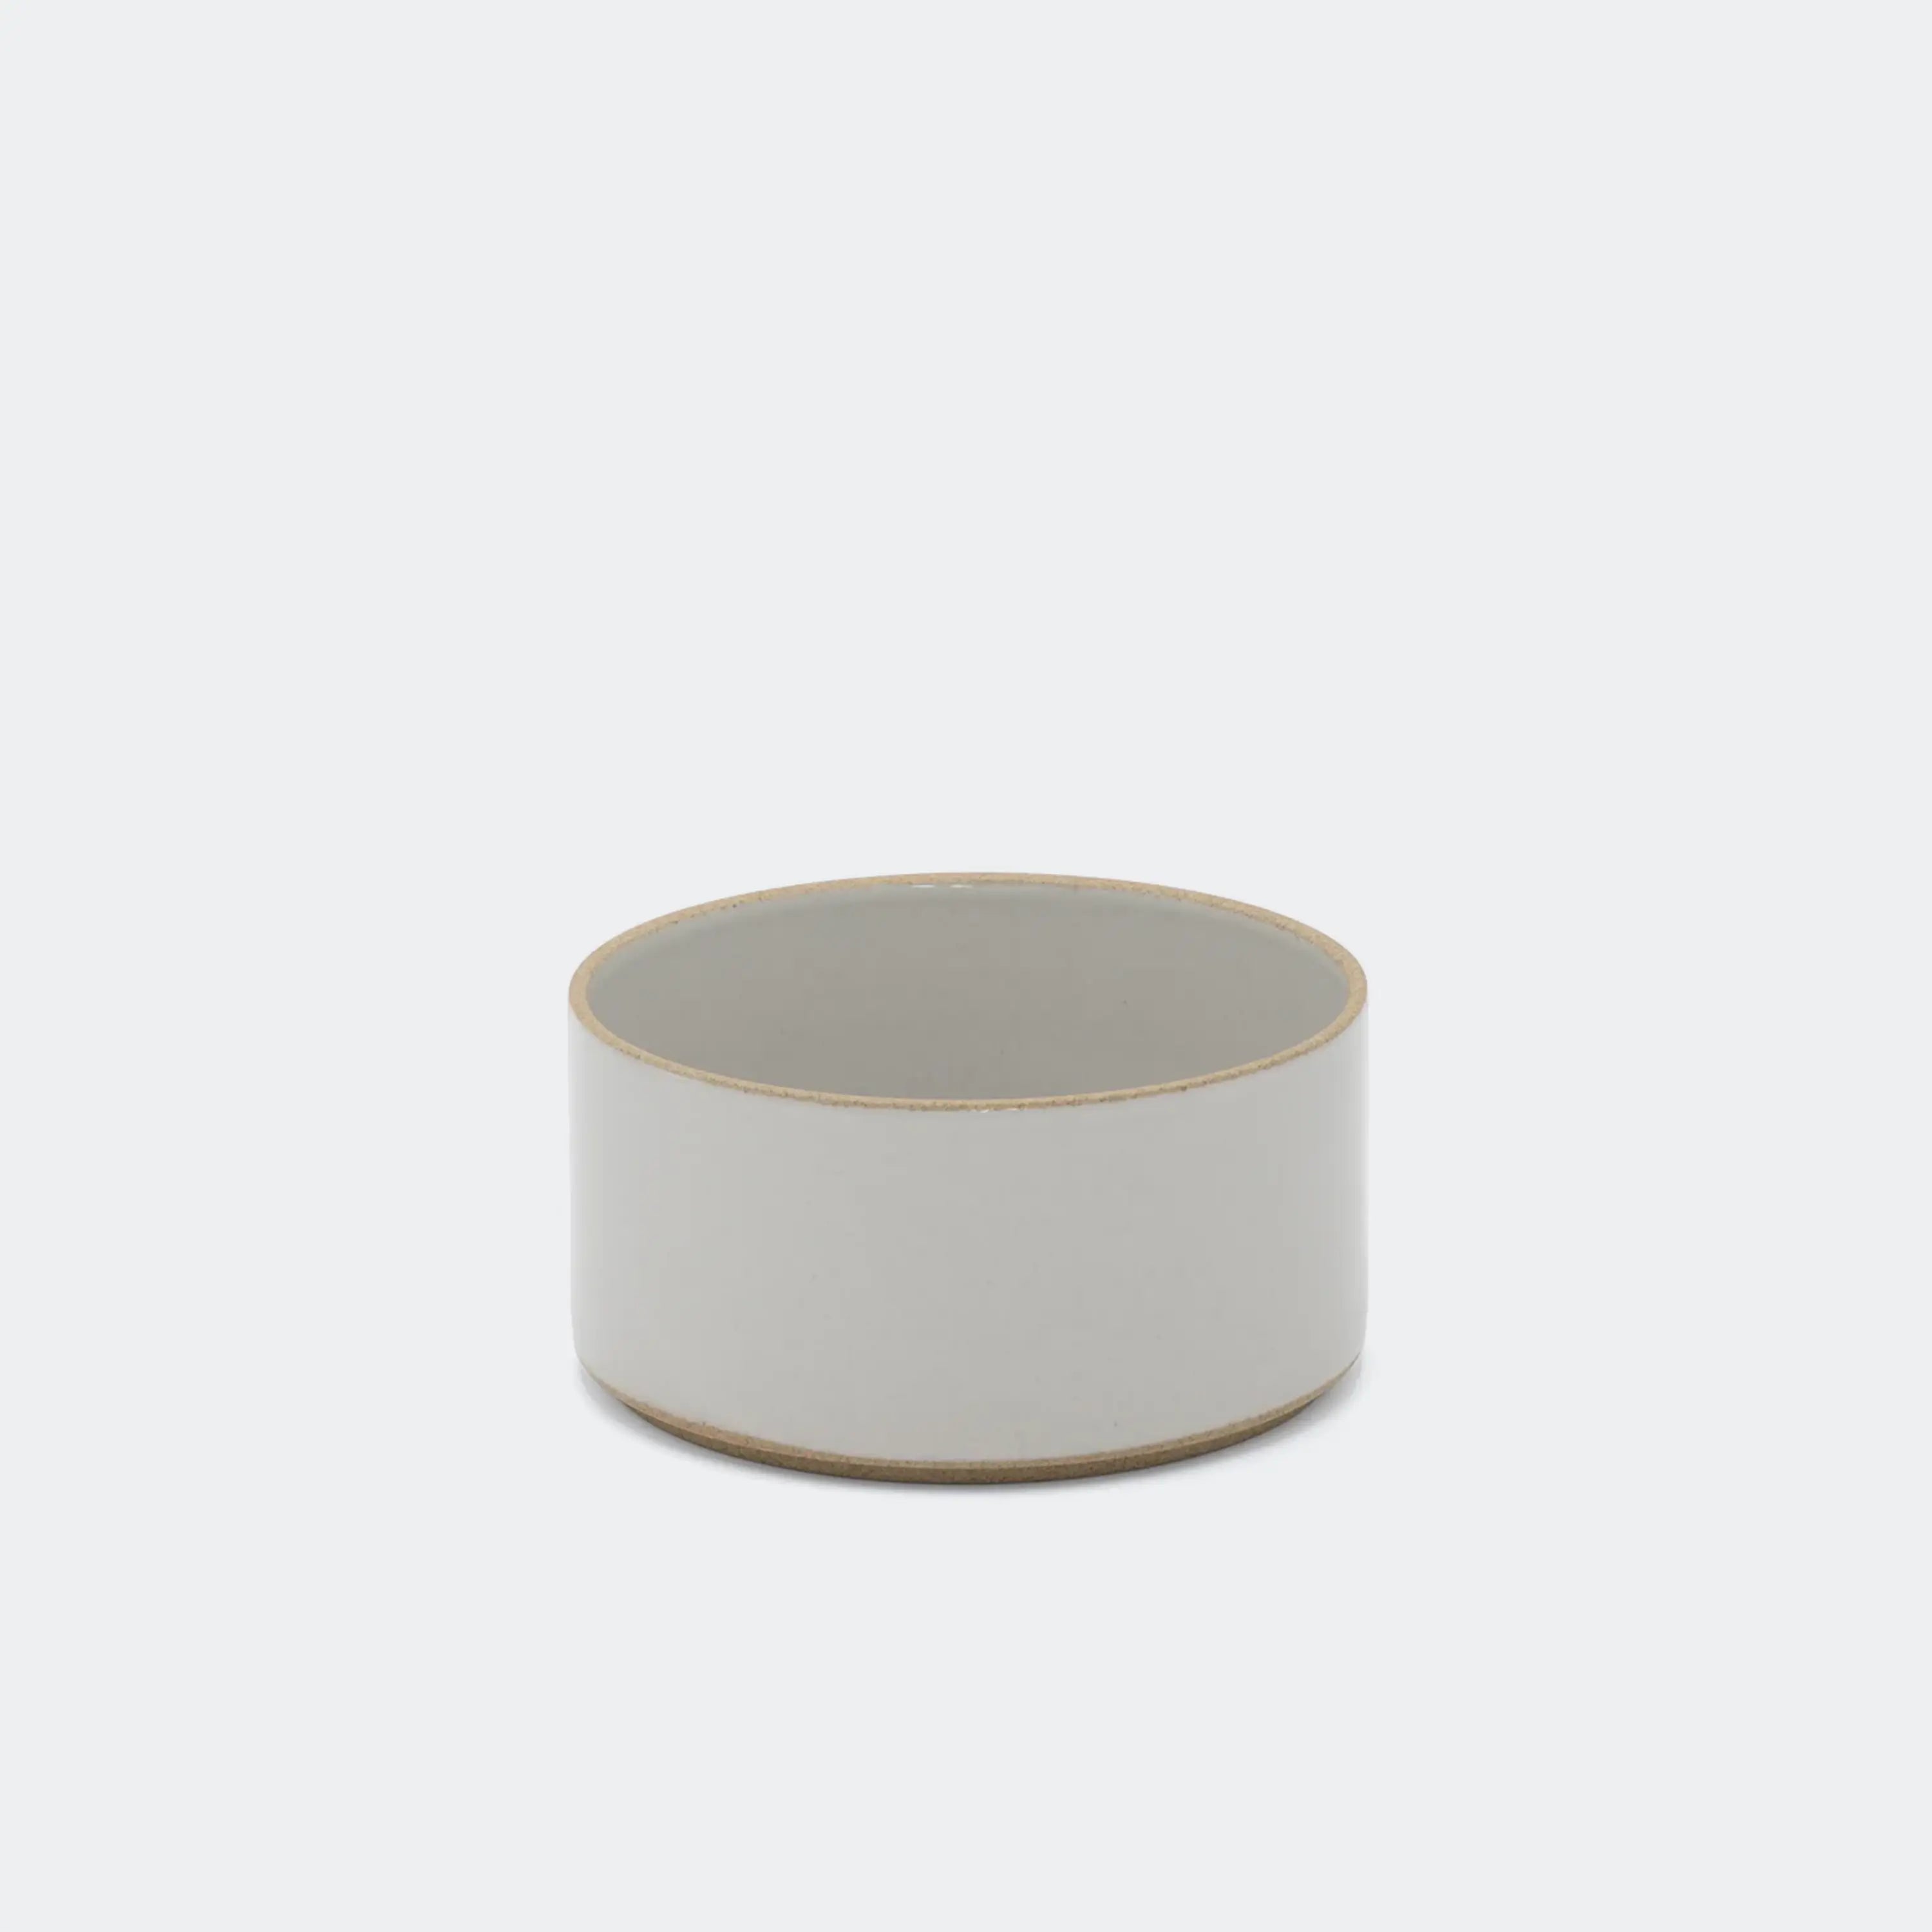 Hasami Porcelain Hasami Porcelain Tall Bowl in Gloss Gray 5.5" - KANSO#Size_5.5"